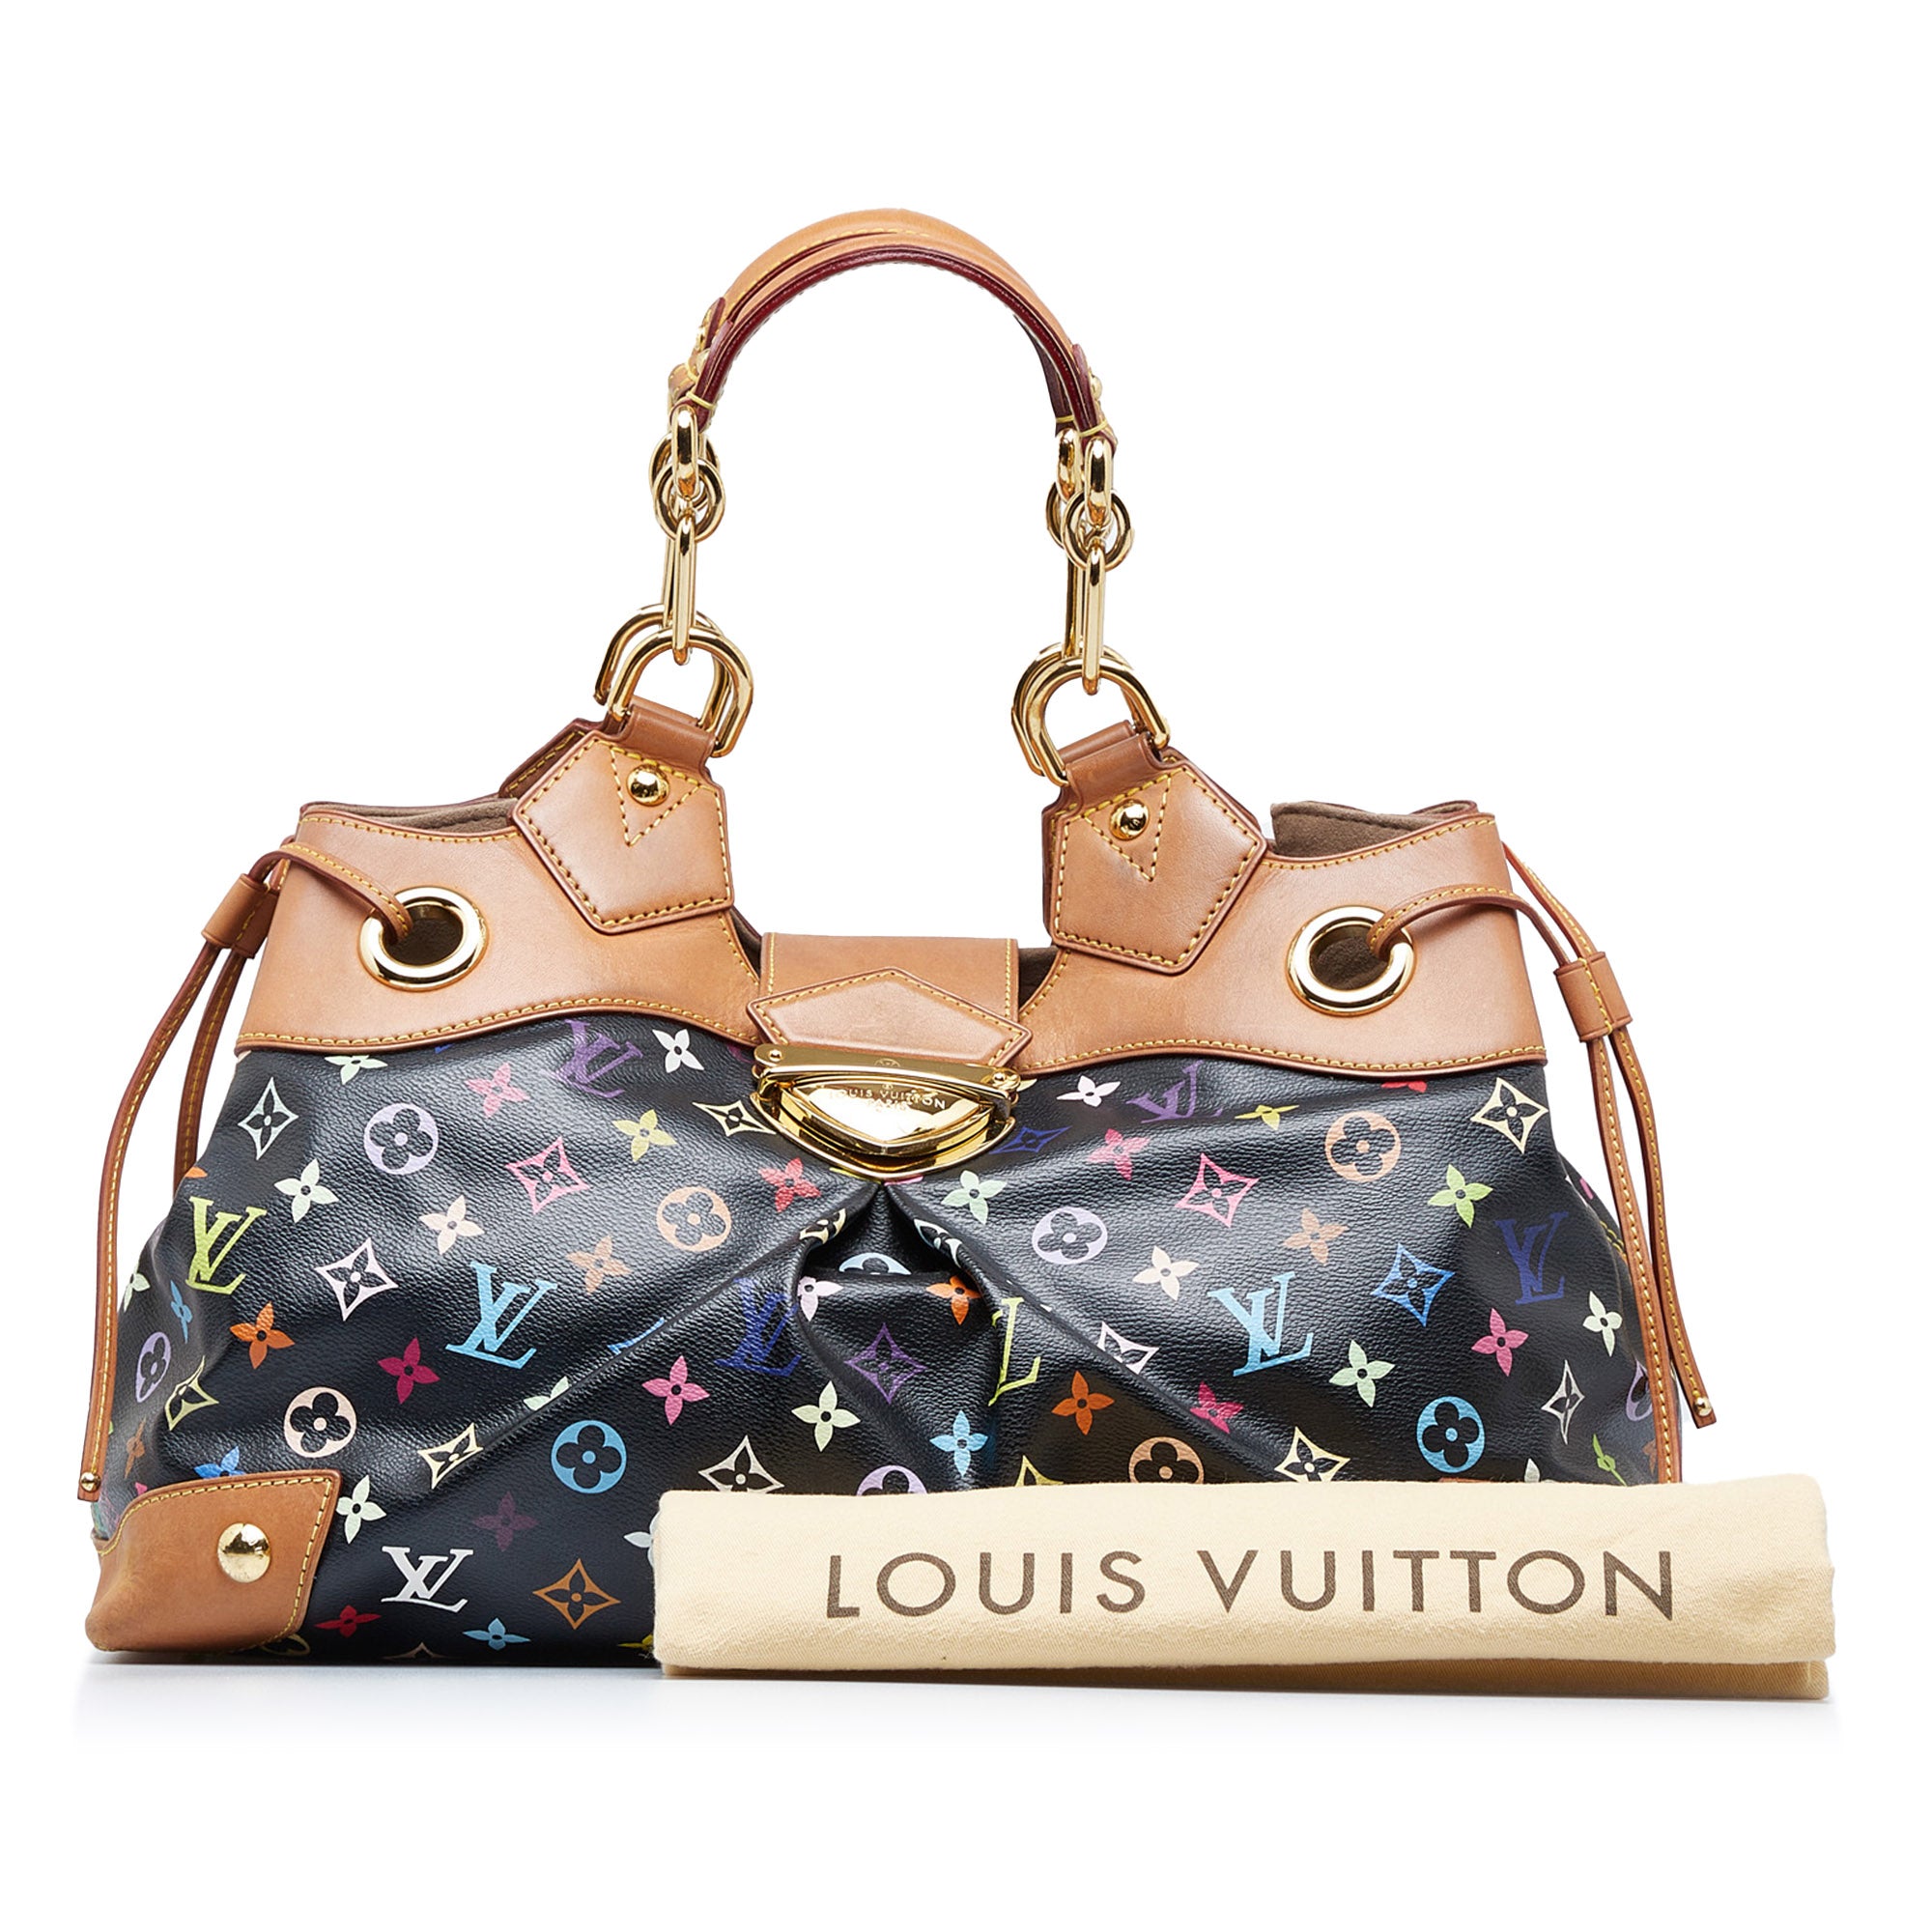 LOUIS VUITTON Monogram Ursula Vintage Handbag